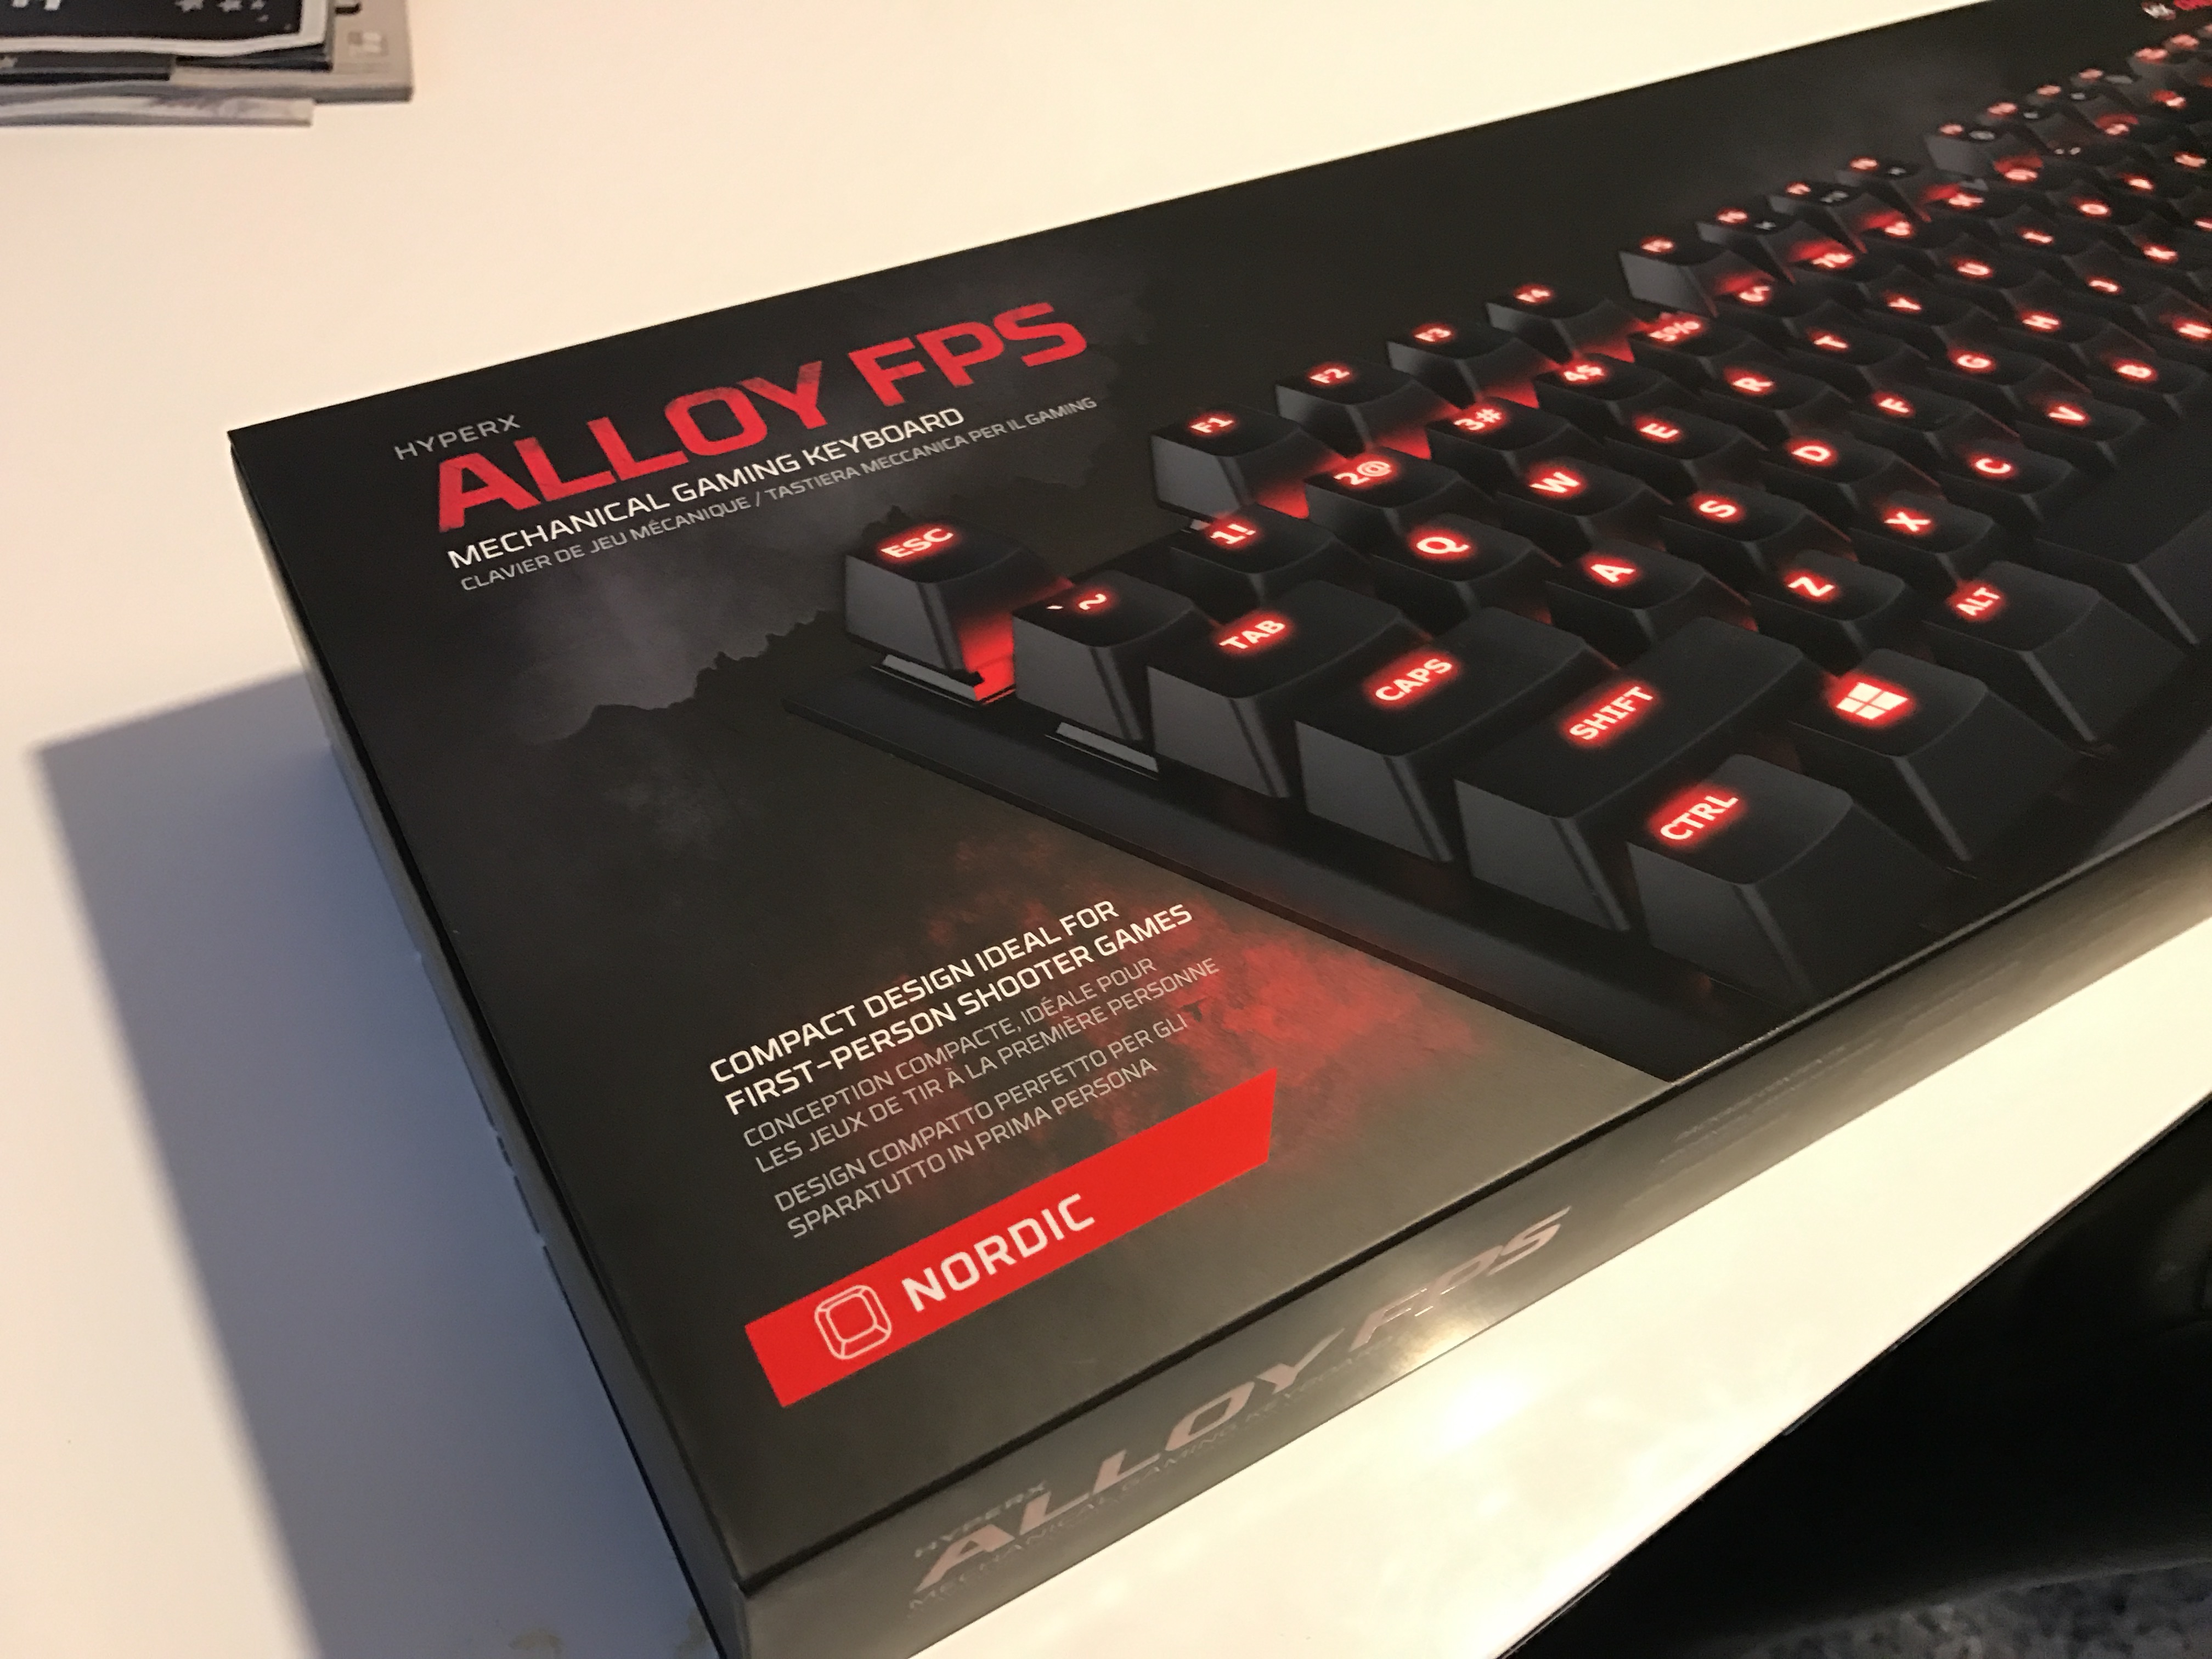 Test: HyperX Alloy FPS mekanisk gaming tastatur | eReviews.dk